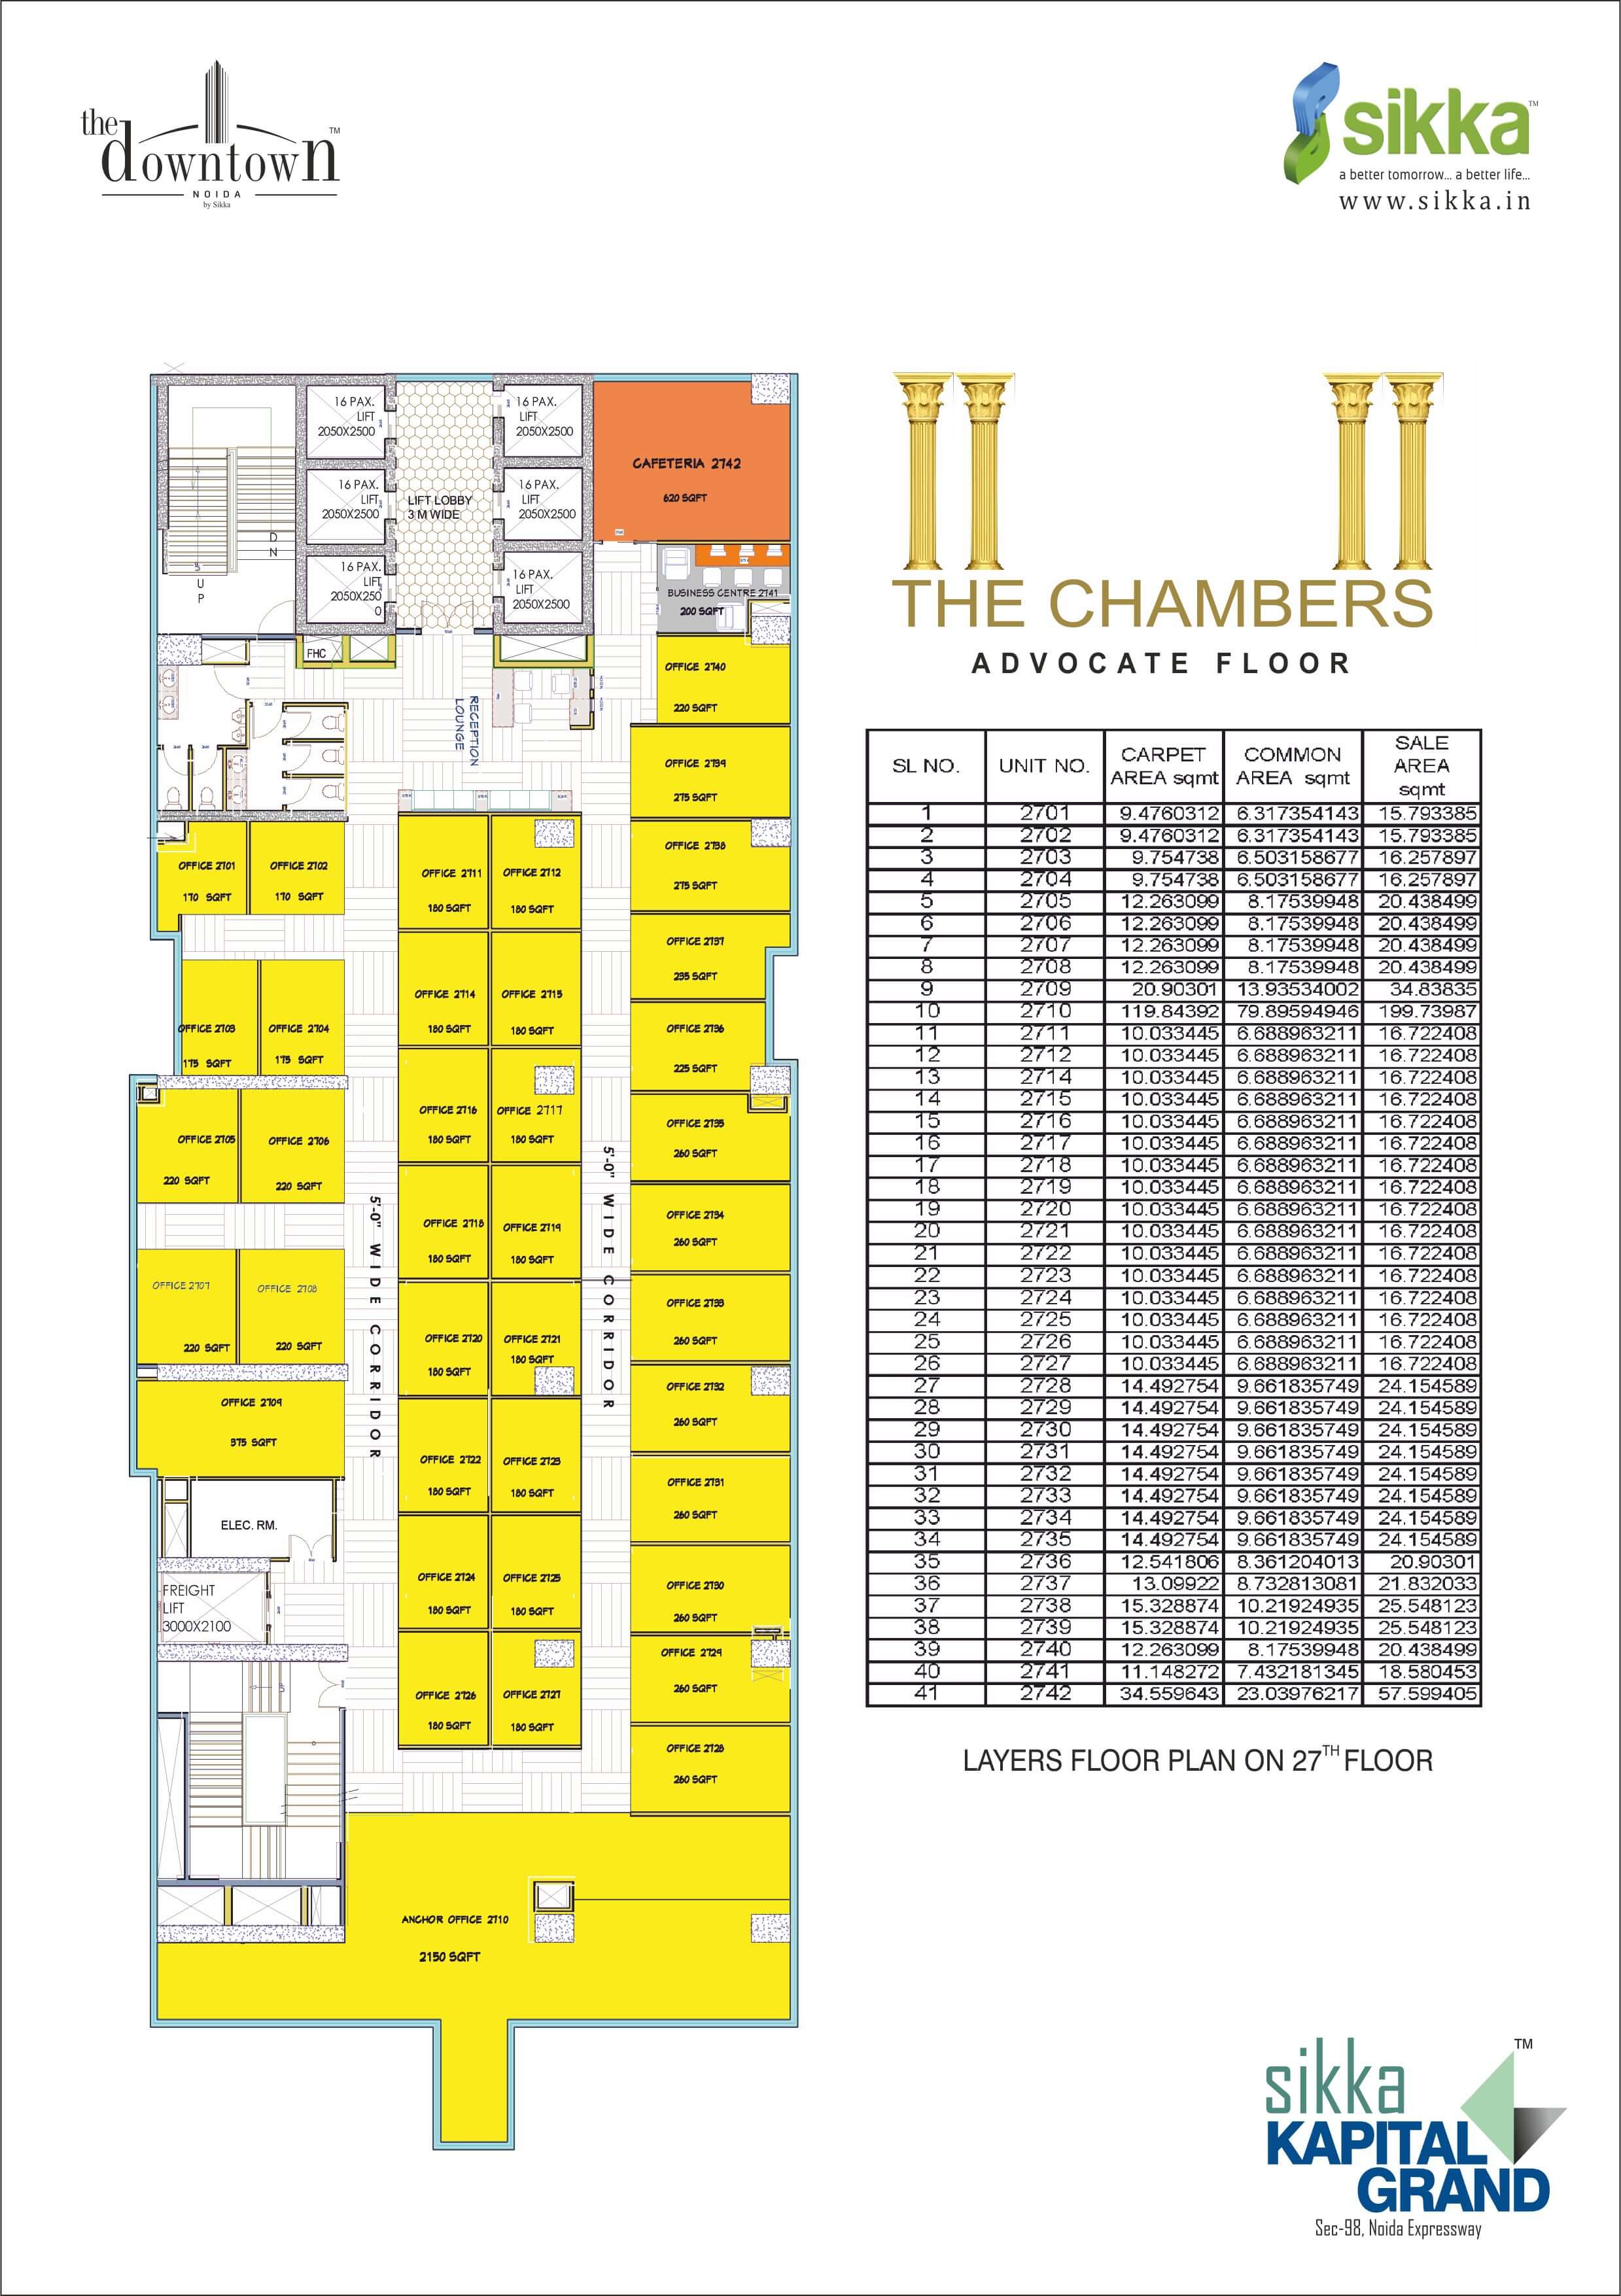 Kapital Grand Floor Plan  - The Chambers - Advocate Floor (27th Floor)